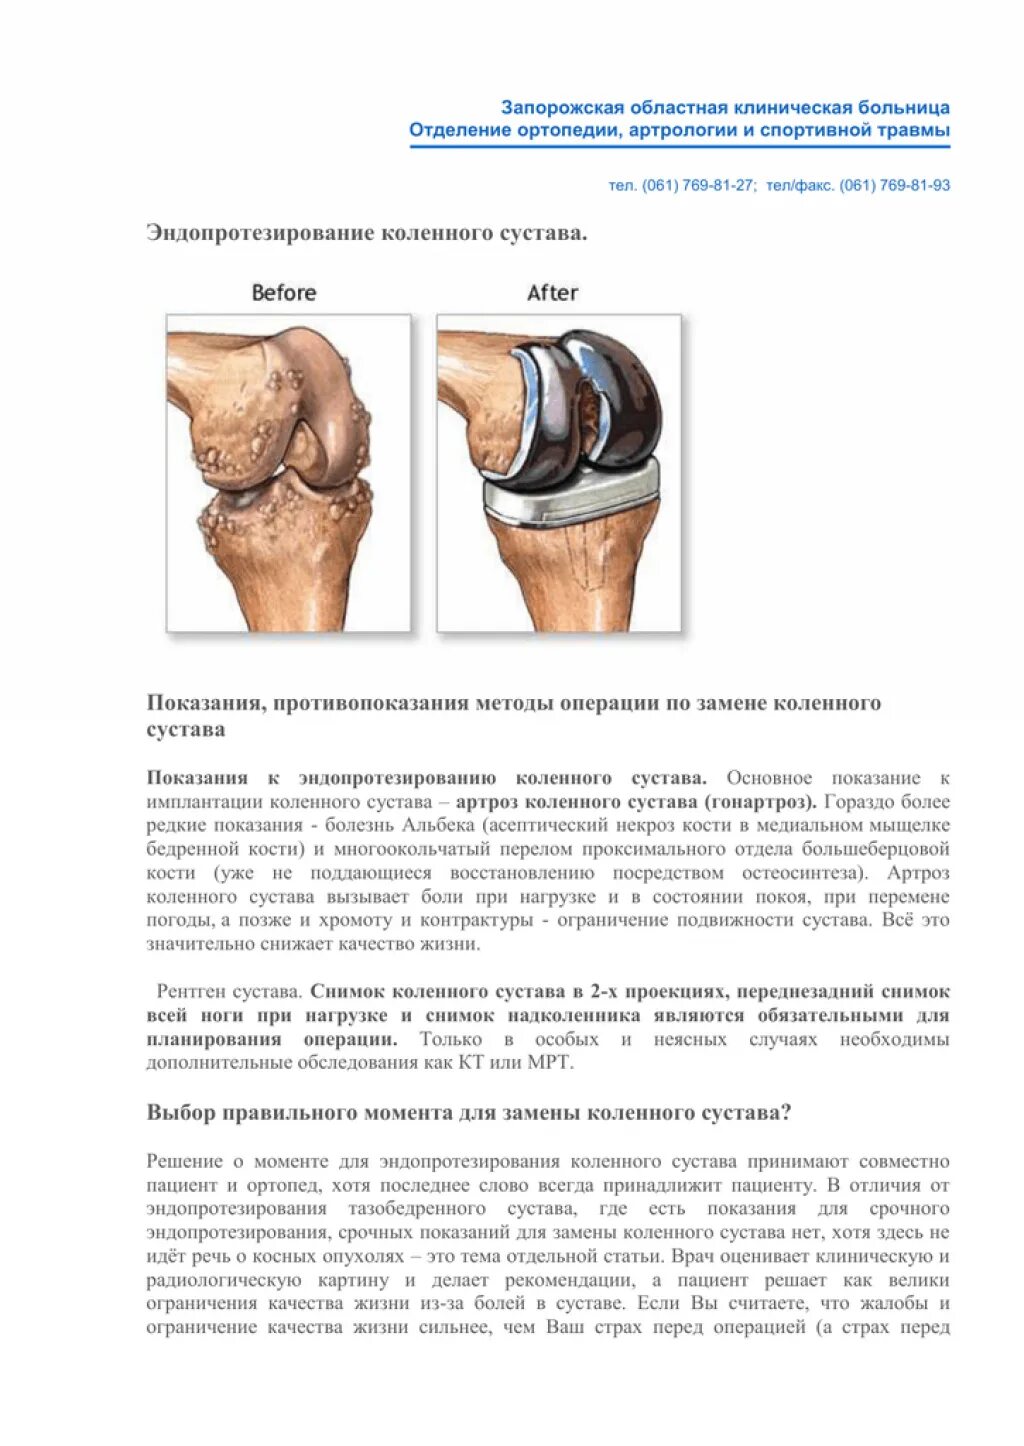 Эндопротезирование коленного сустава. Операция тотального эндопротезирования коленного сустава. ТЭП эндопротезирование коленного сустава. Тотальное эндопротезирование коленного сустава схема операции. Эндопротезирование отзывы после операции